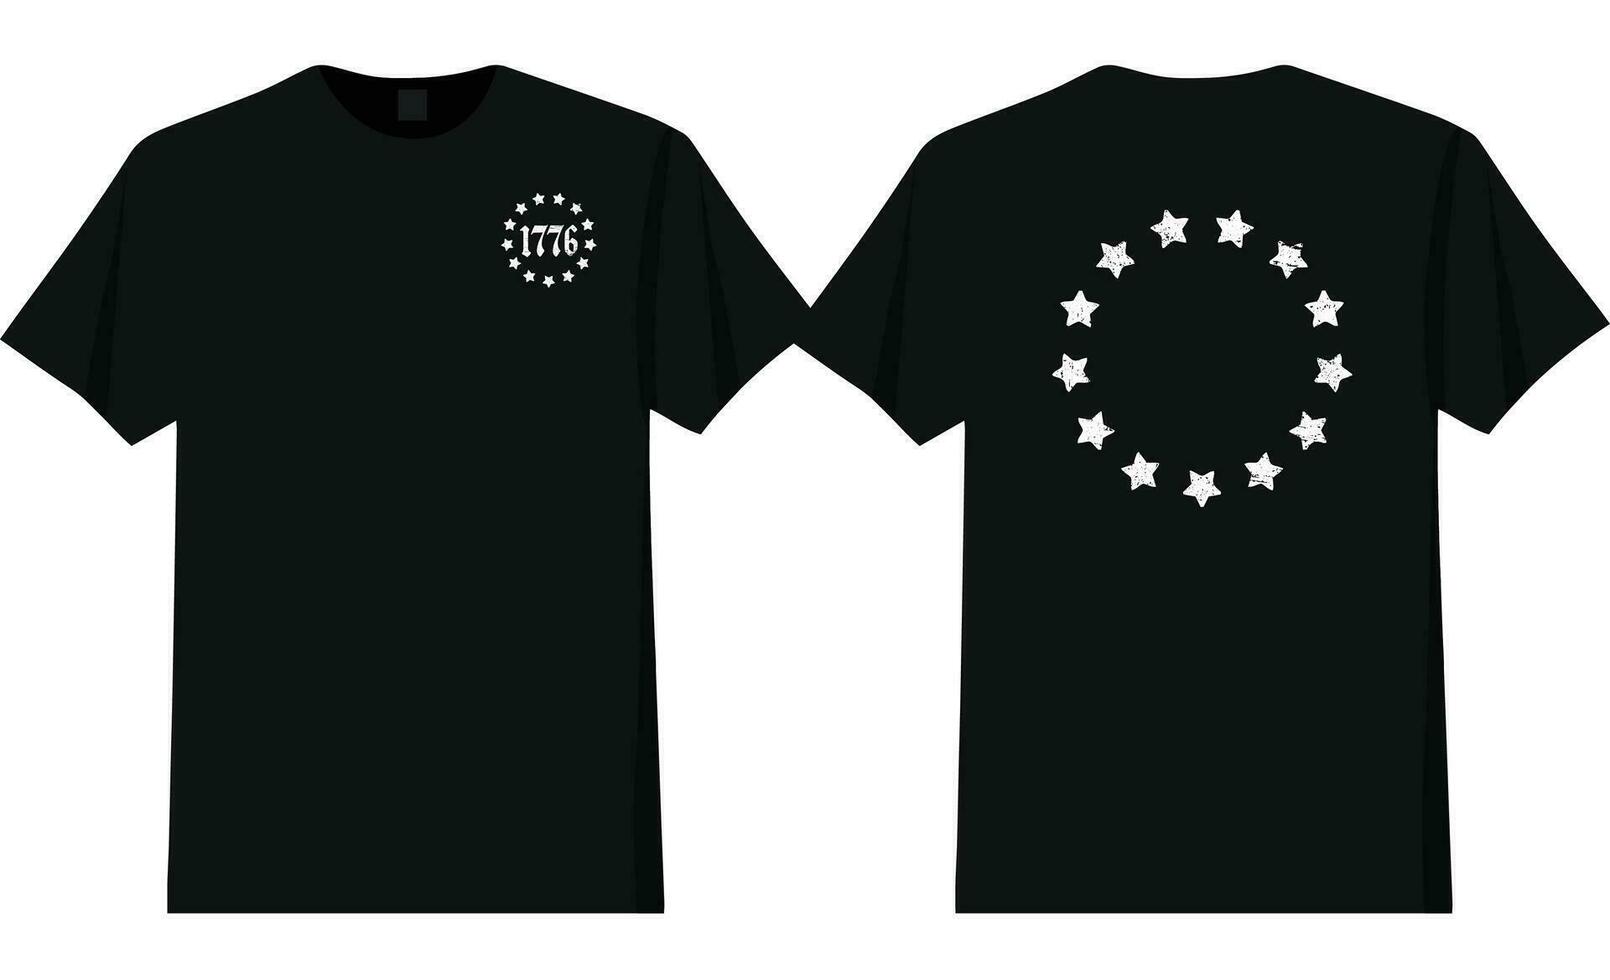 13 sterren 1776 t-shirt ontwerp vector